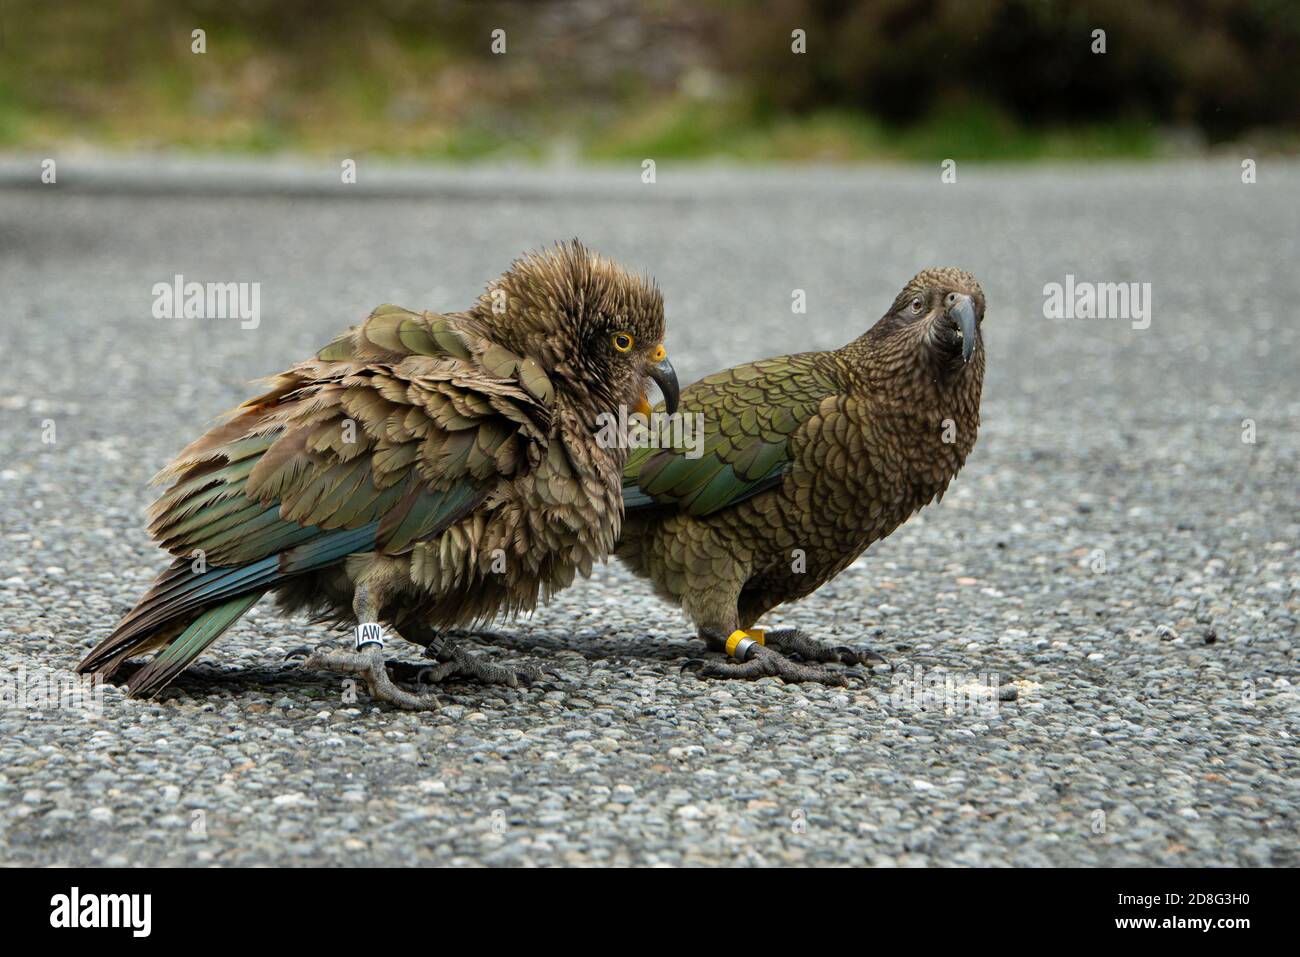 Kea bird nestor notabilis only hi-res stock photography and images - Alamy